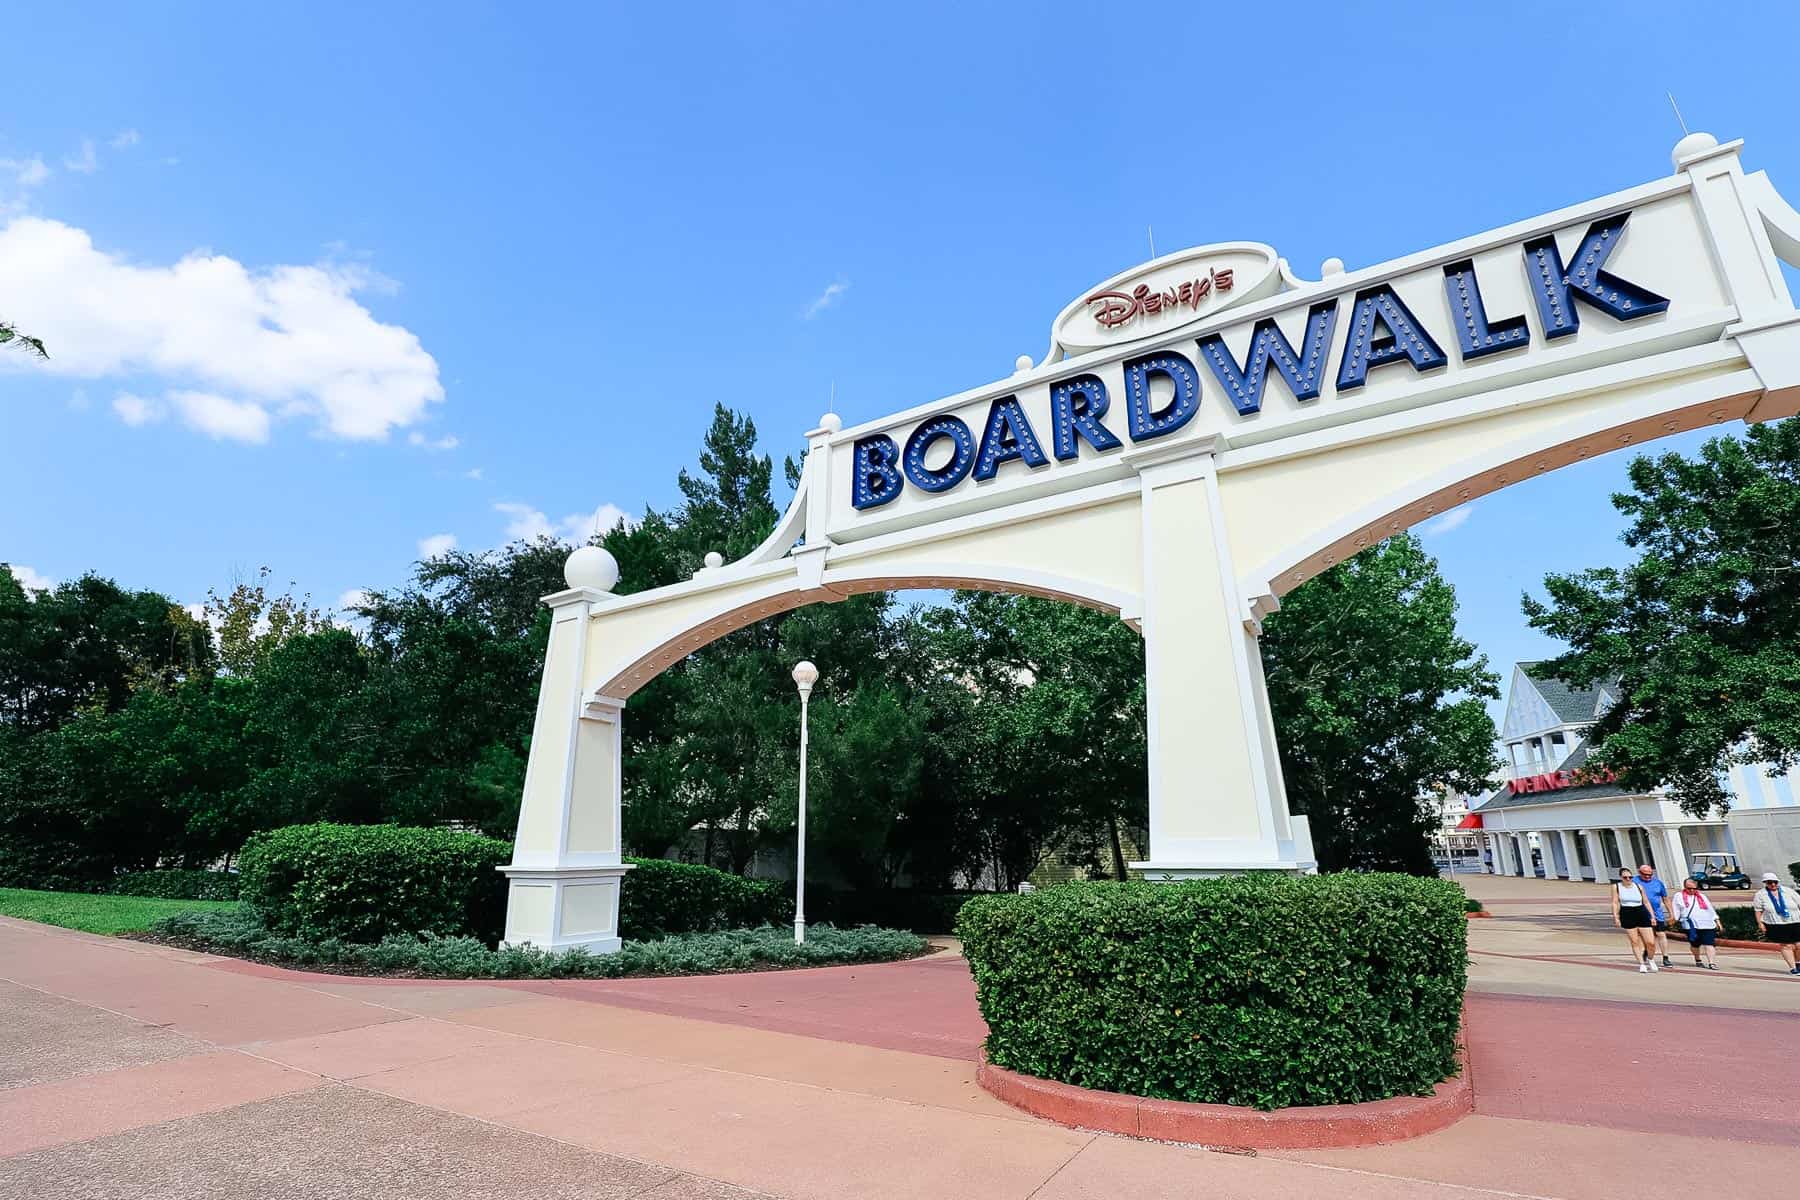 Disney's Boardwalk sign